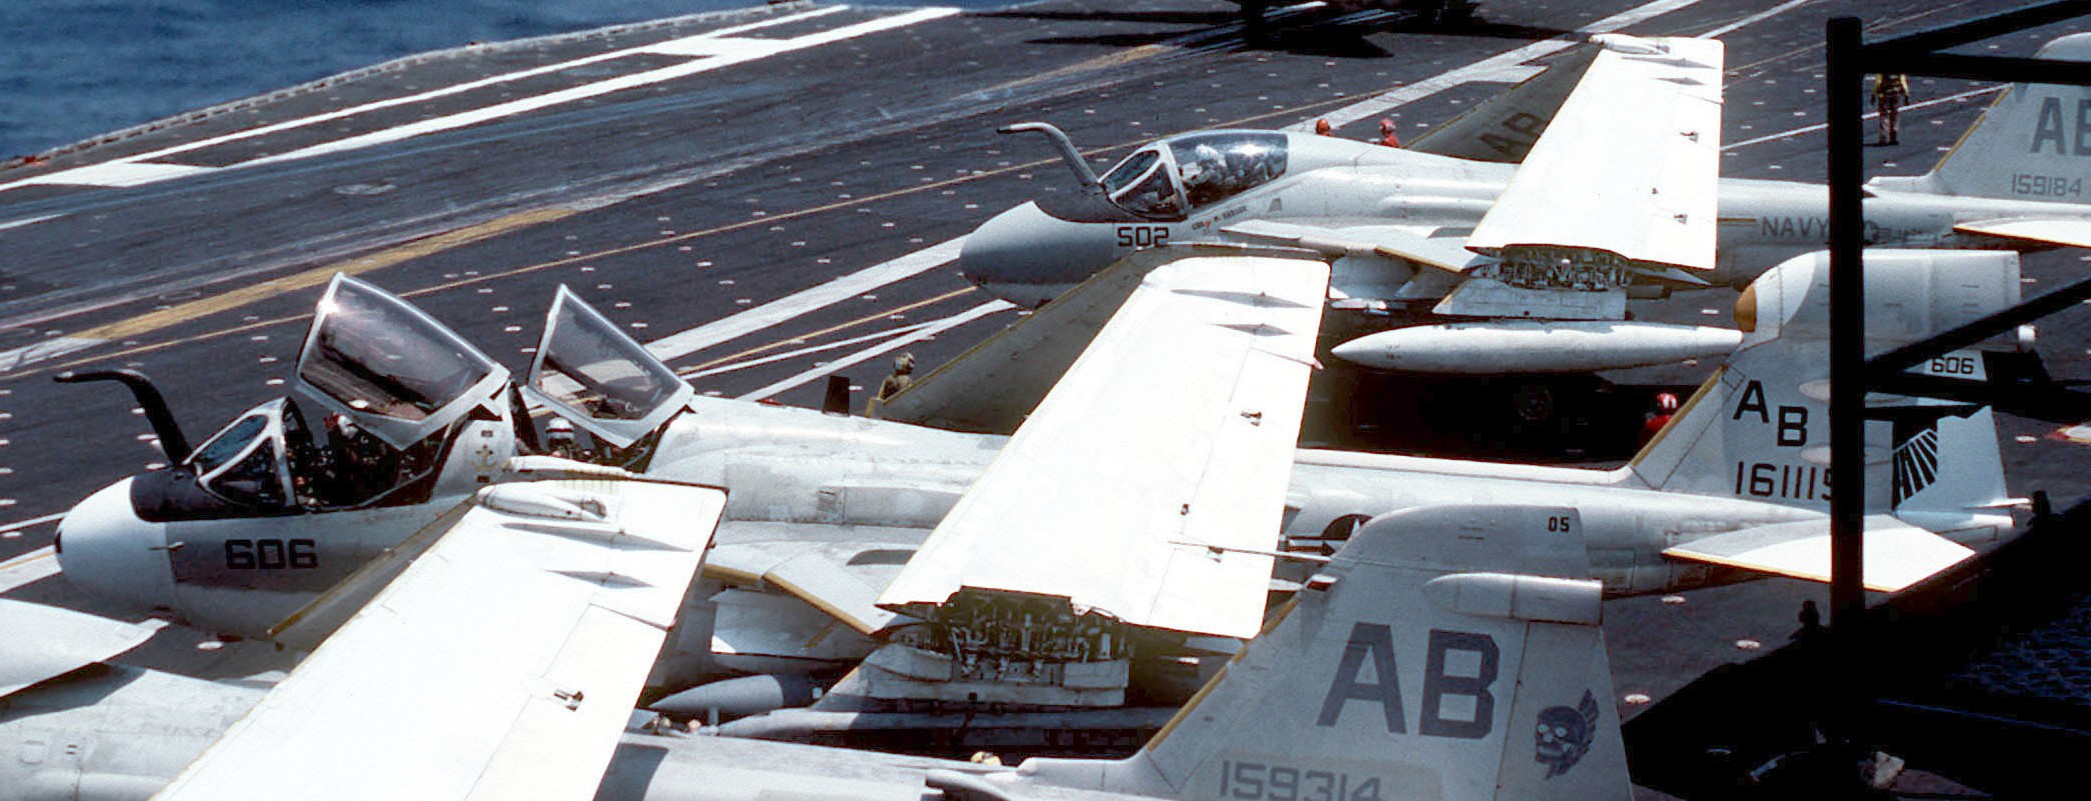 vaq-135 black ravens tactical electronic warfare squadron tacelron us navy gruman ea-6b prowler cvw-1 uss america cv-66 81